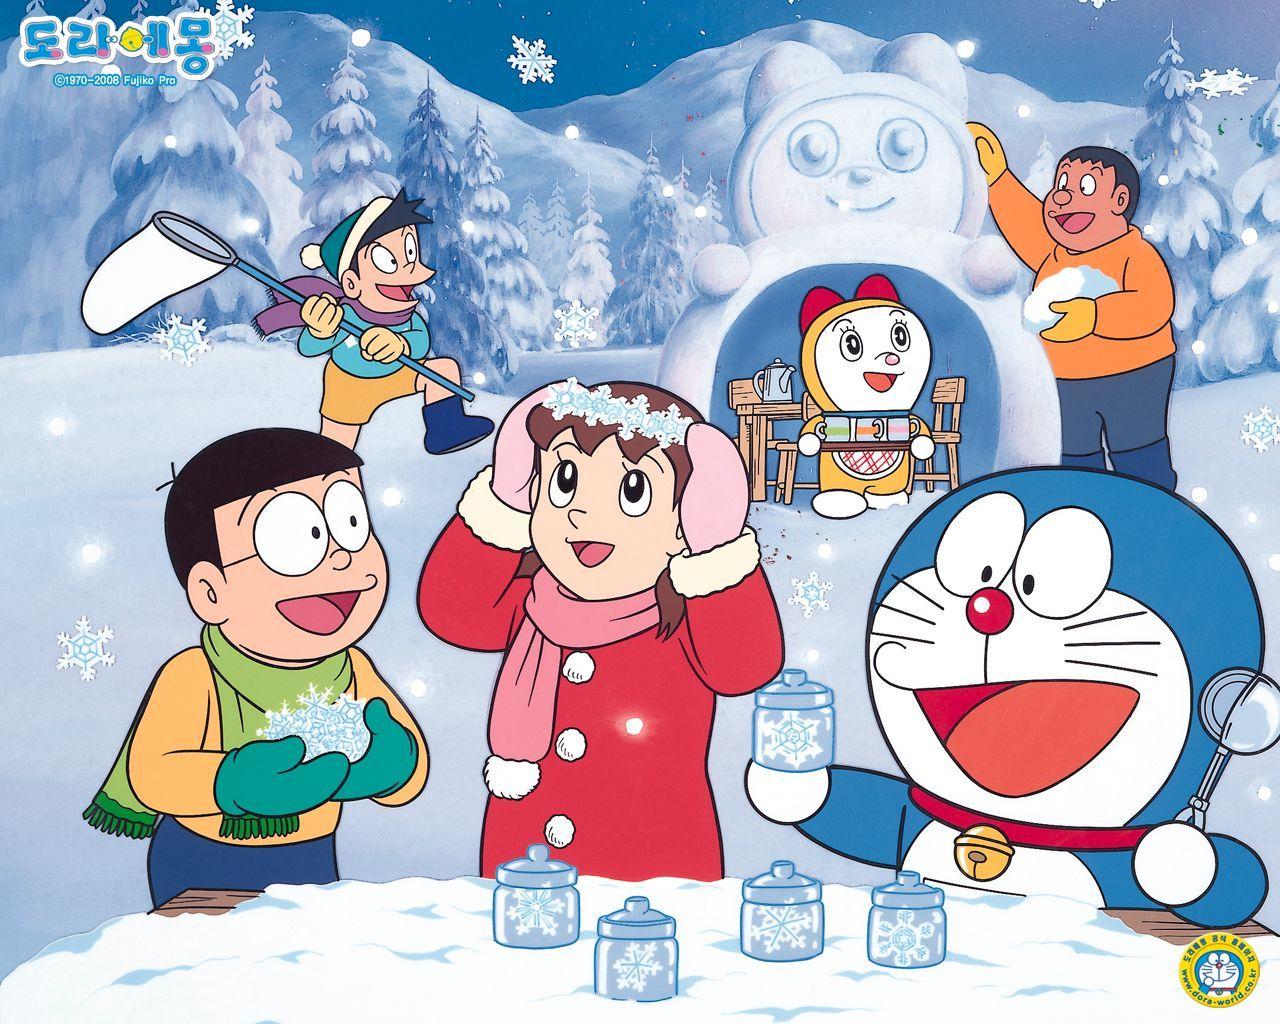 Doraemon Wallpaper Download. Doraemon wallpaper, Cartoon